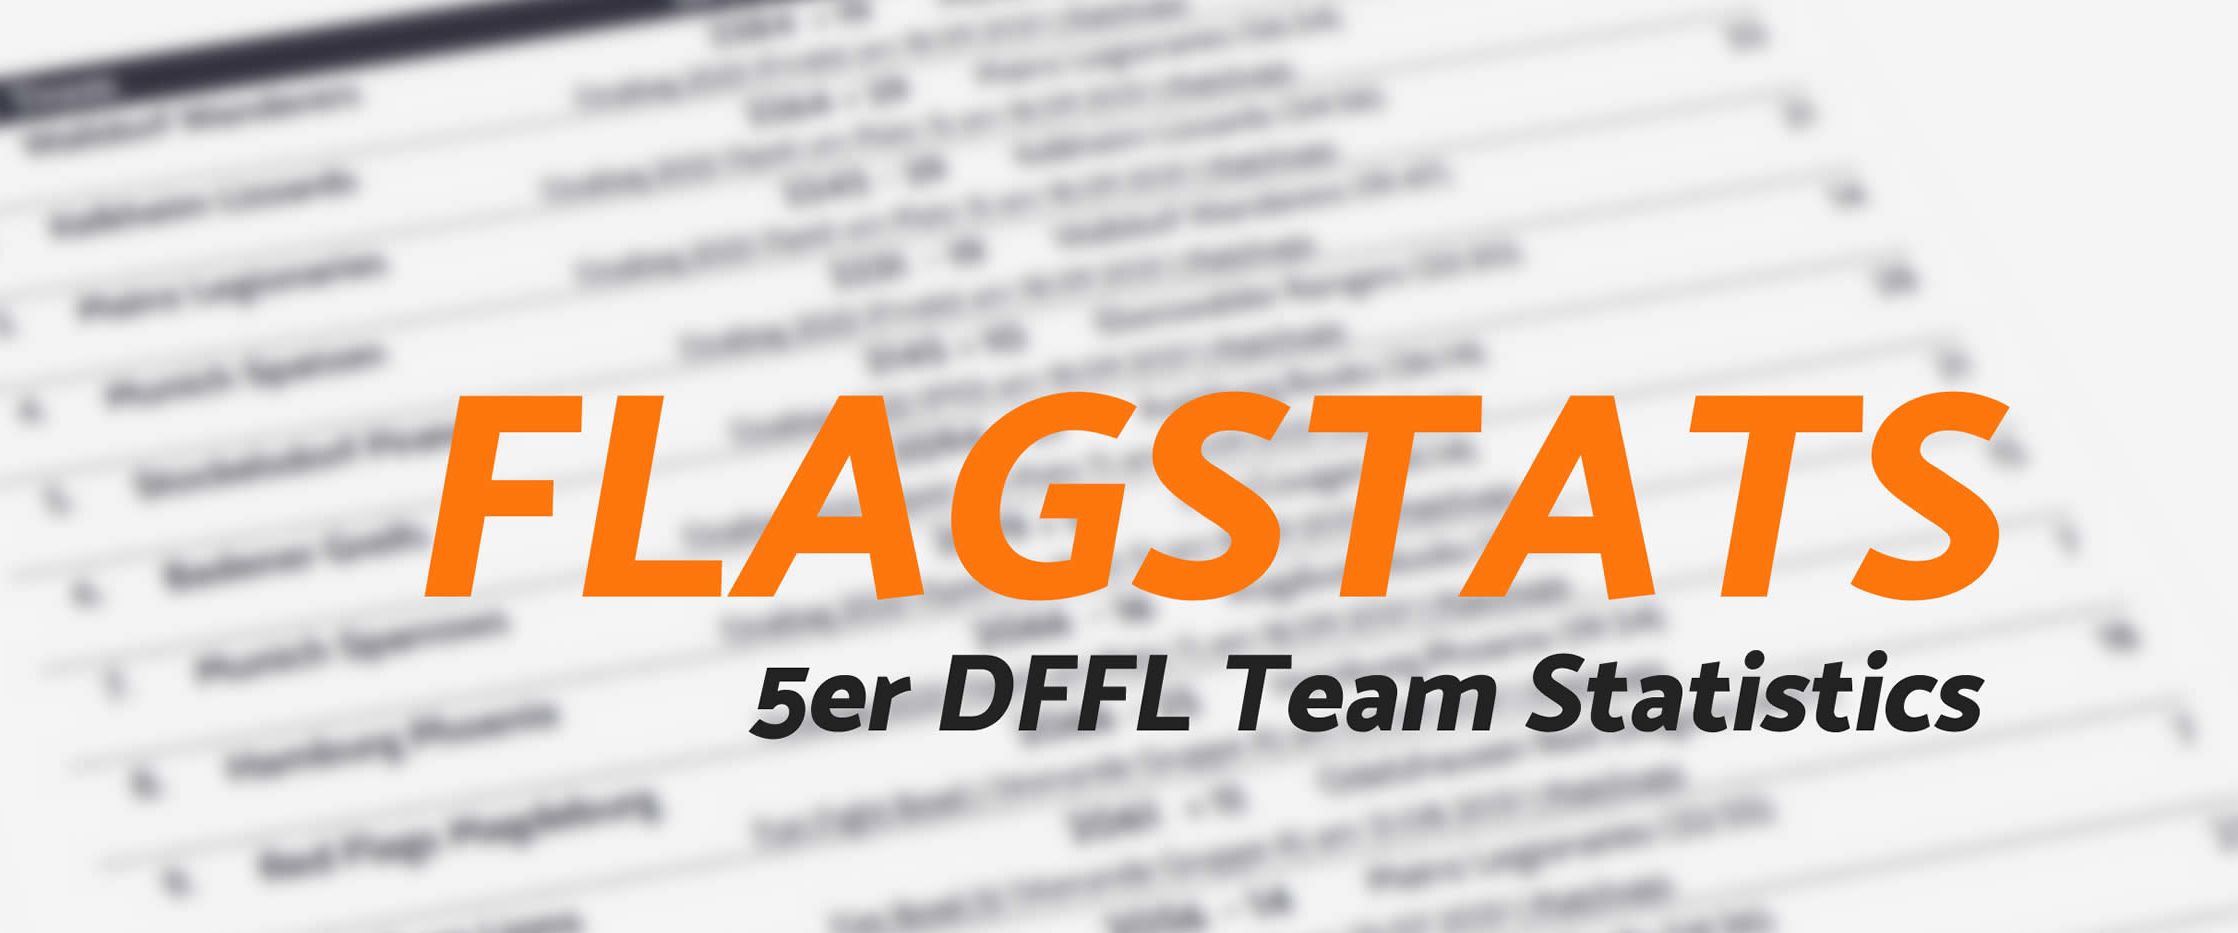 FlagStats - 5er DFFL Team Statistics